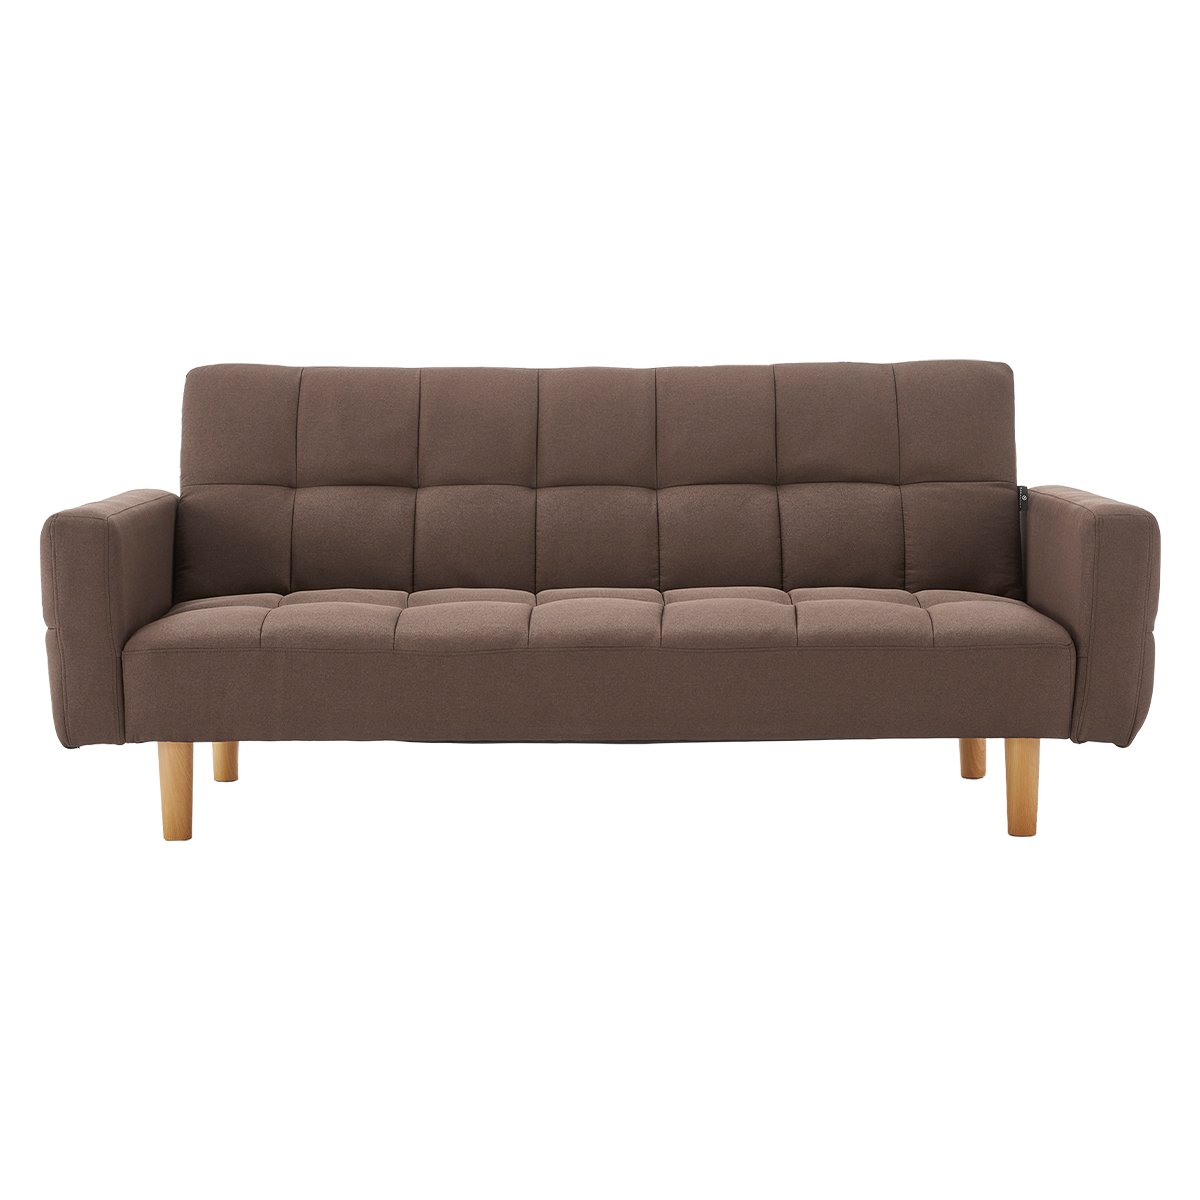 Sarantino 3-Seater Fabric Sofa Bed Futon - Brown 2